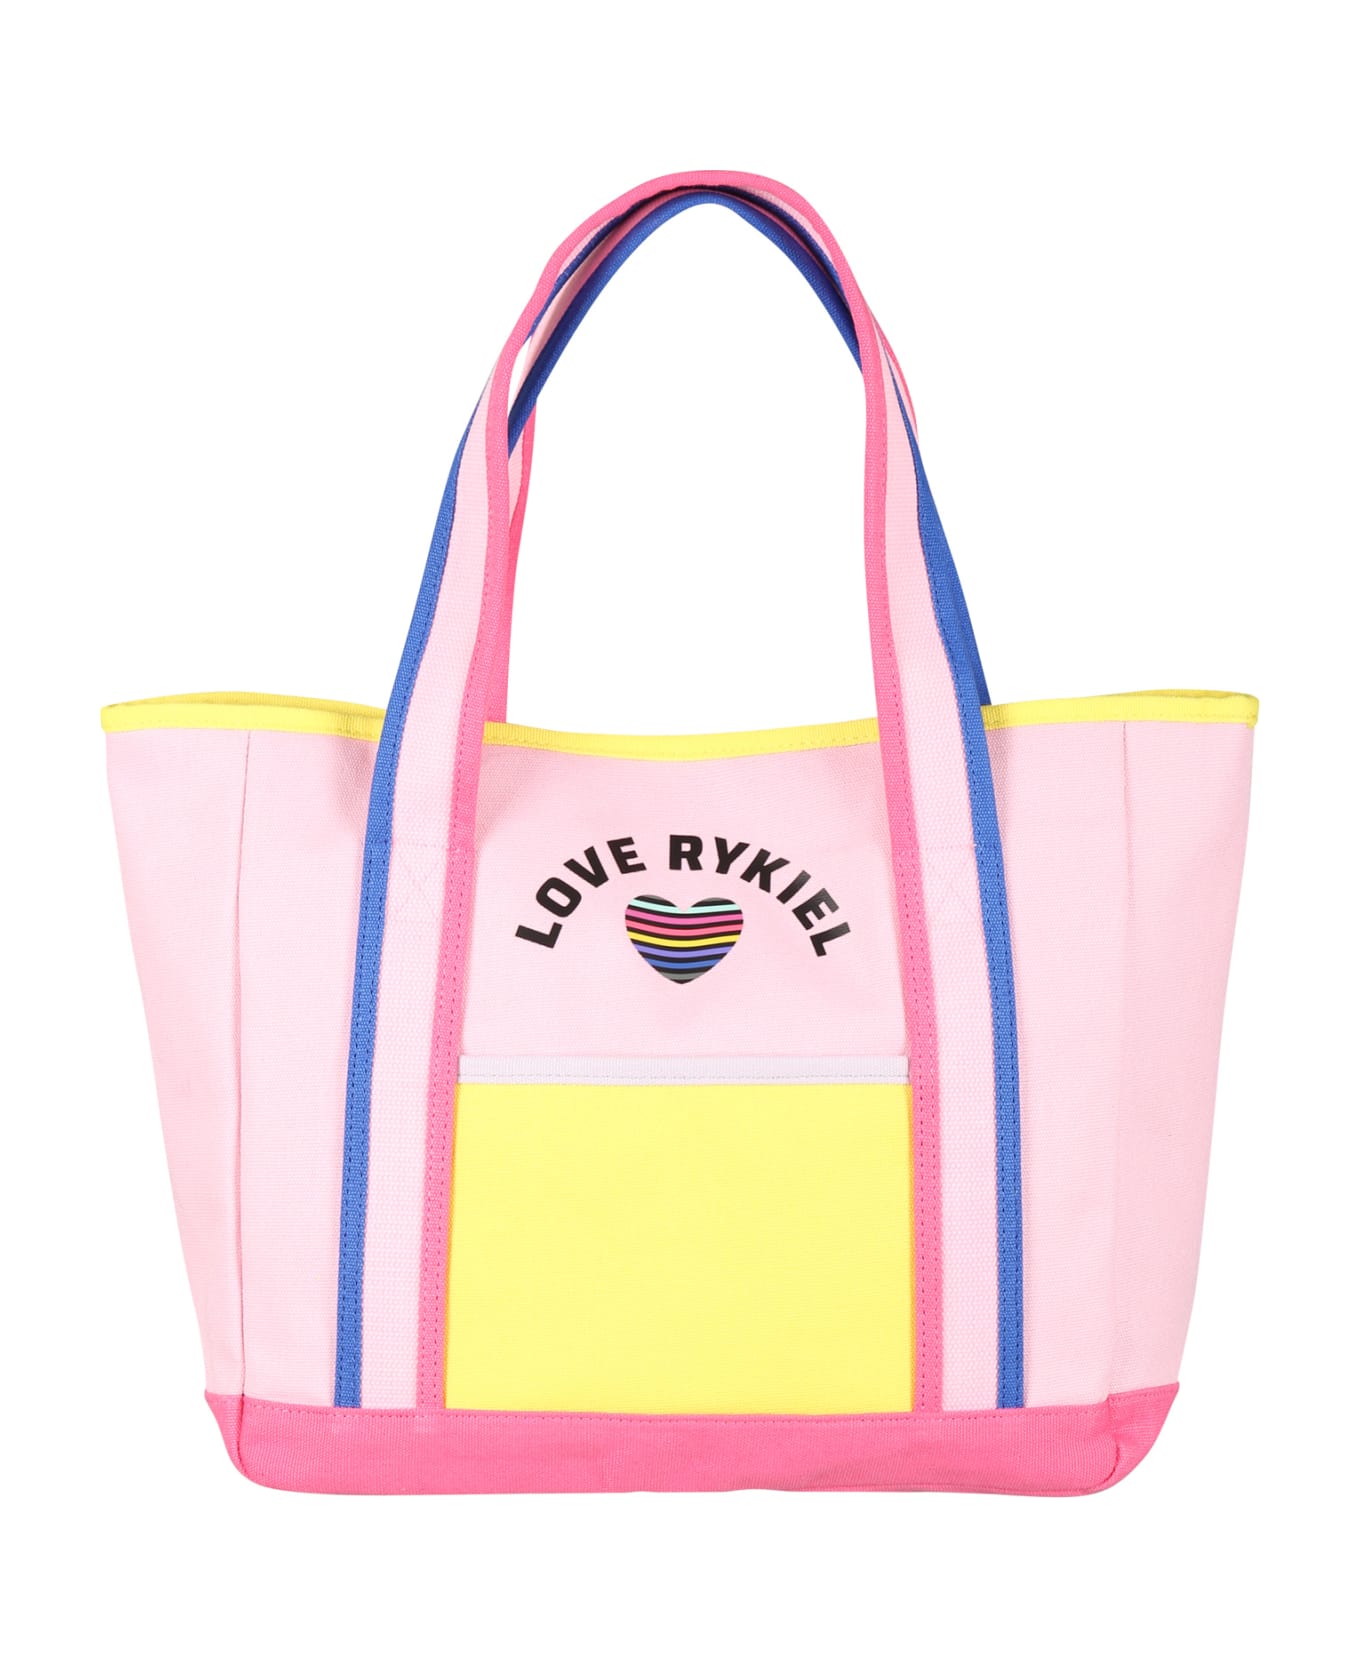 Rykiel Enfant Pink Bag For Girl With Love Rykiel Writing - Pink